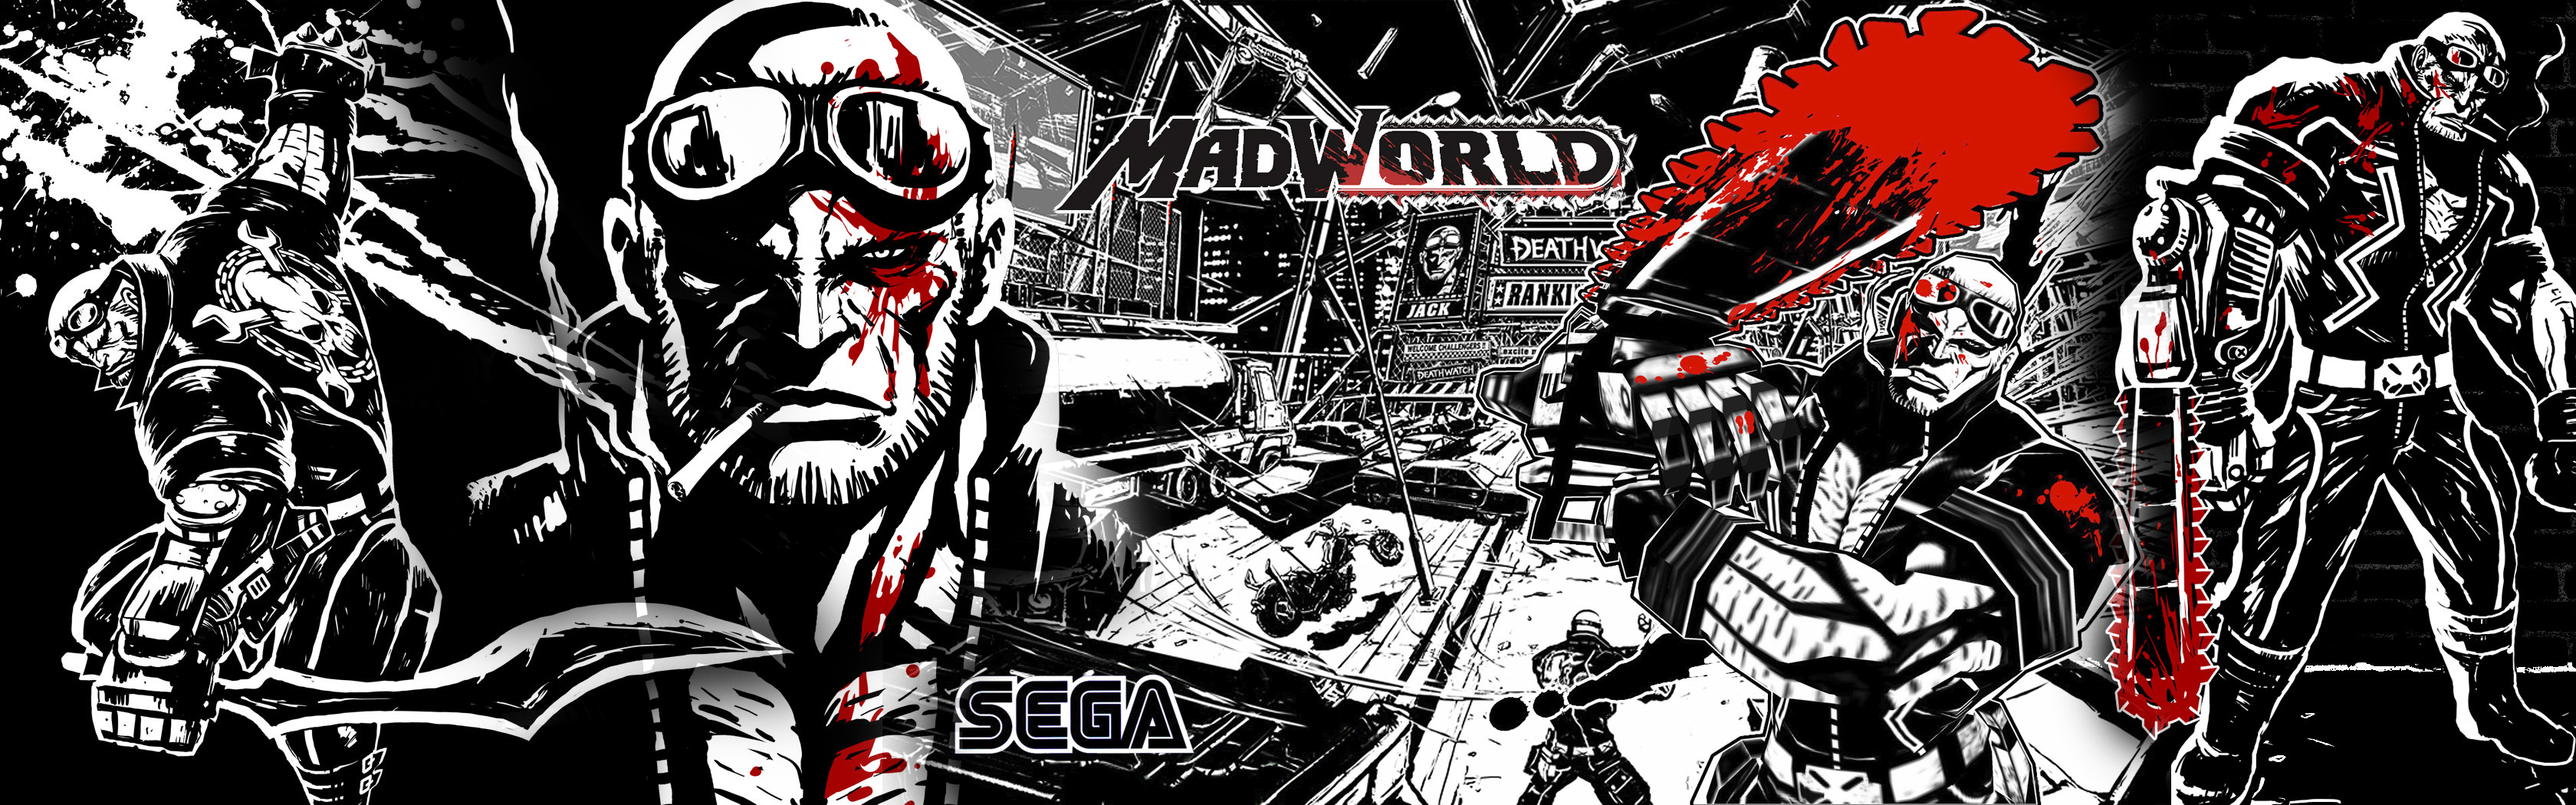 HD desktop wallpaper: Video Game, Madworld download free picture #203742